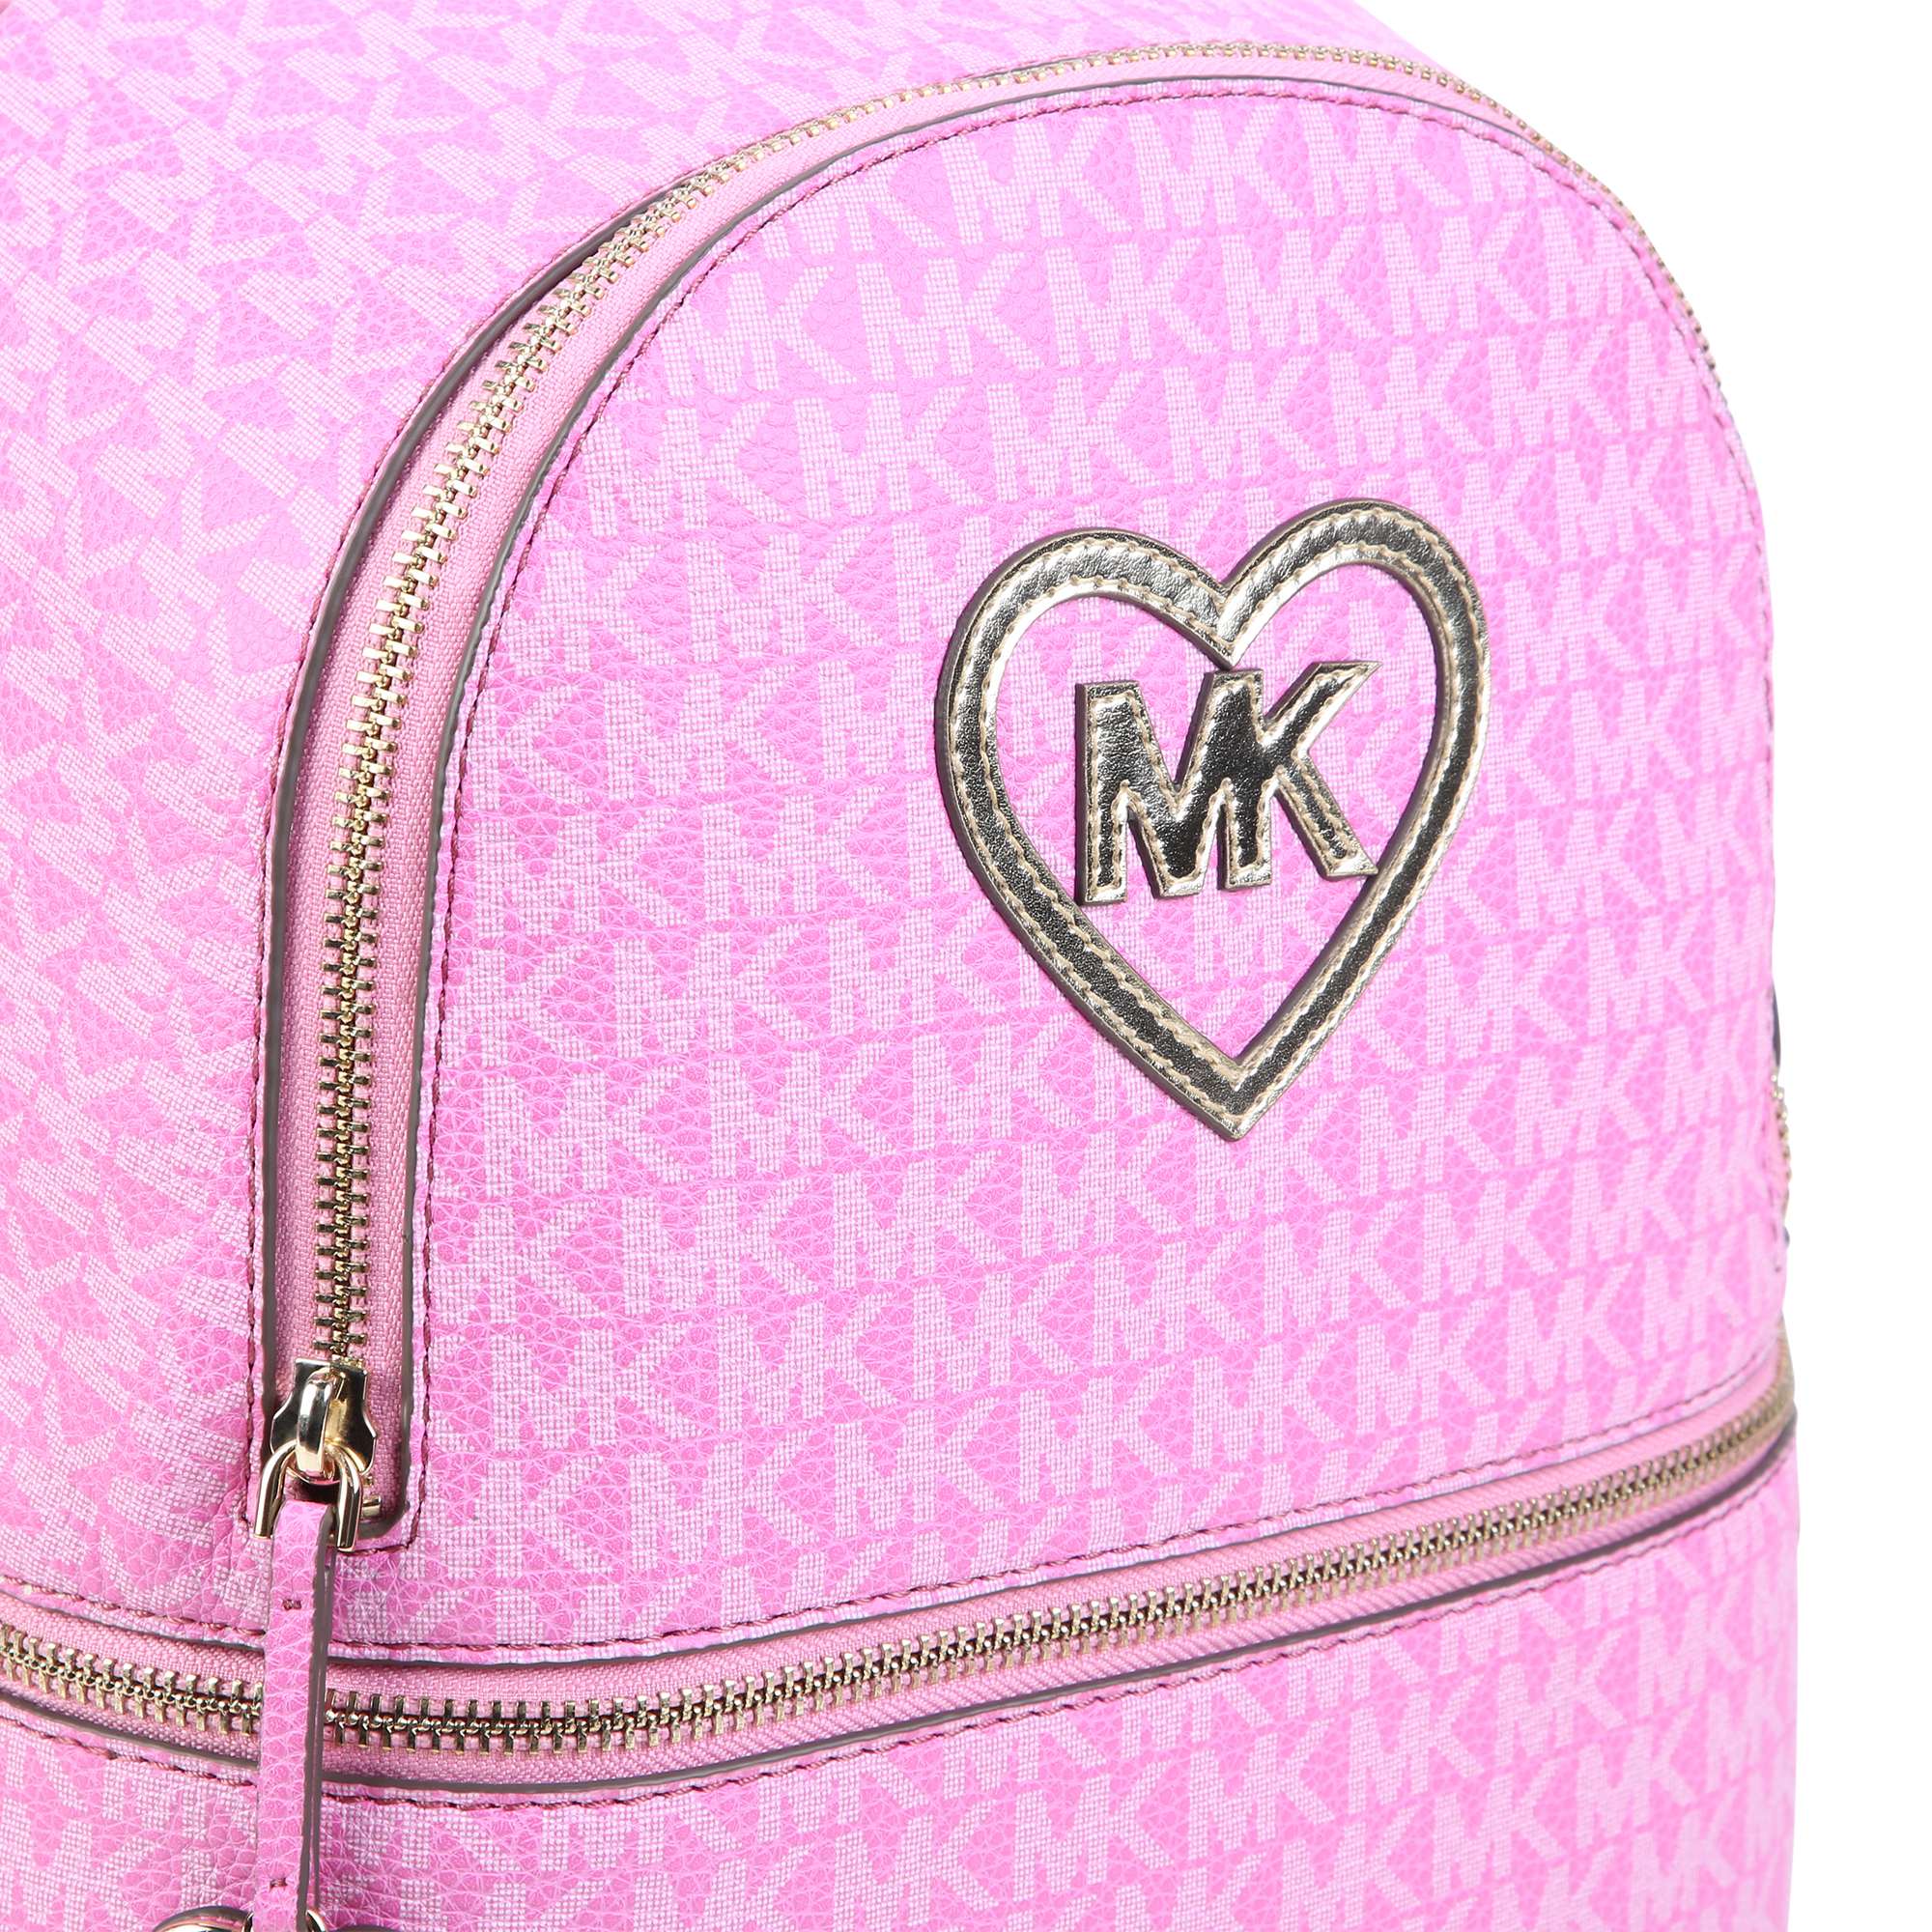 Printed backpack MICHAEL KORS for GIRL